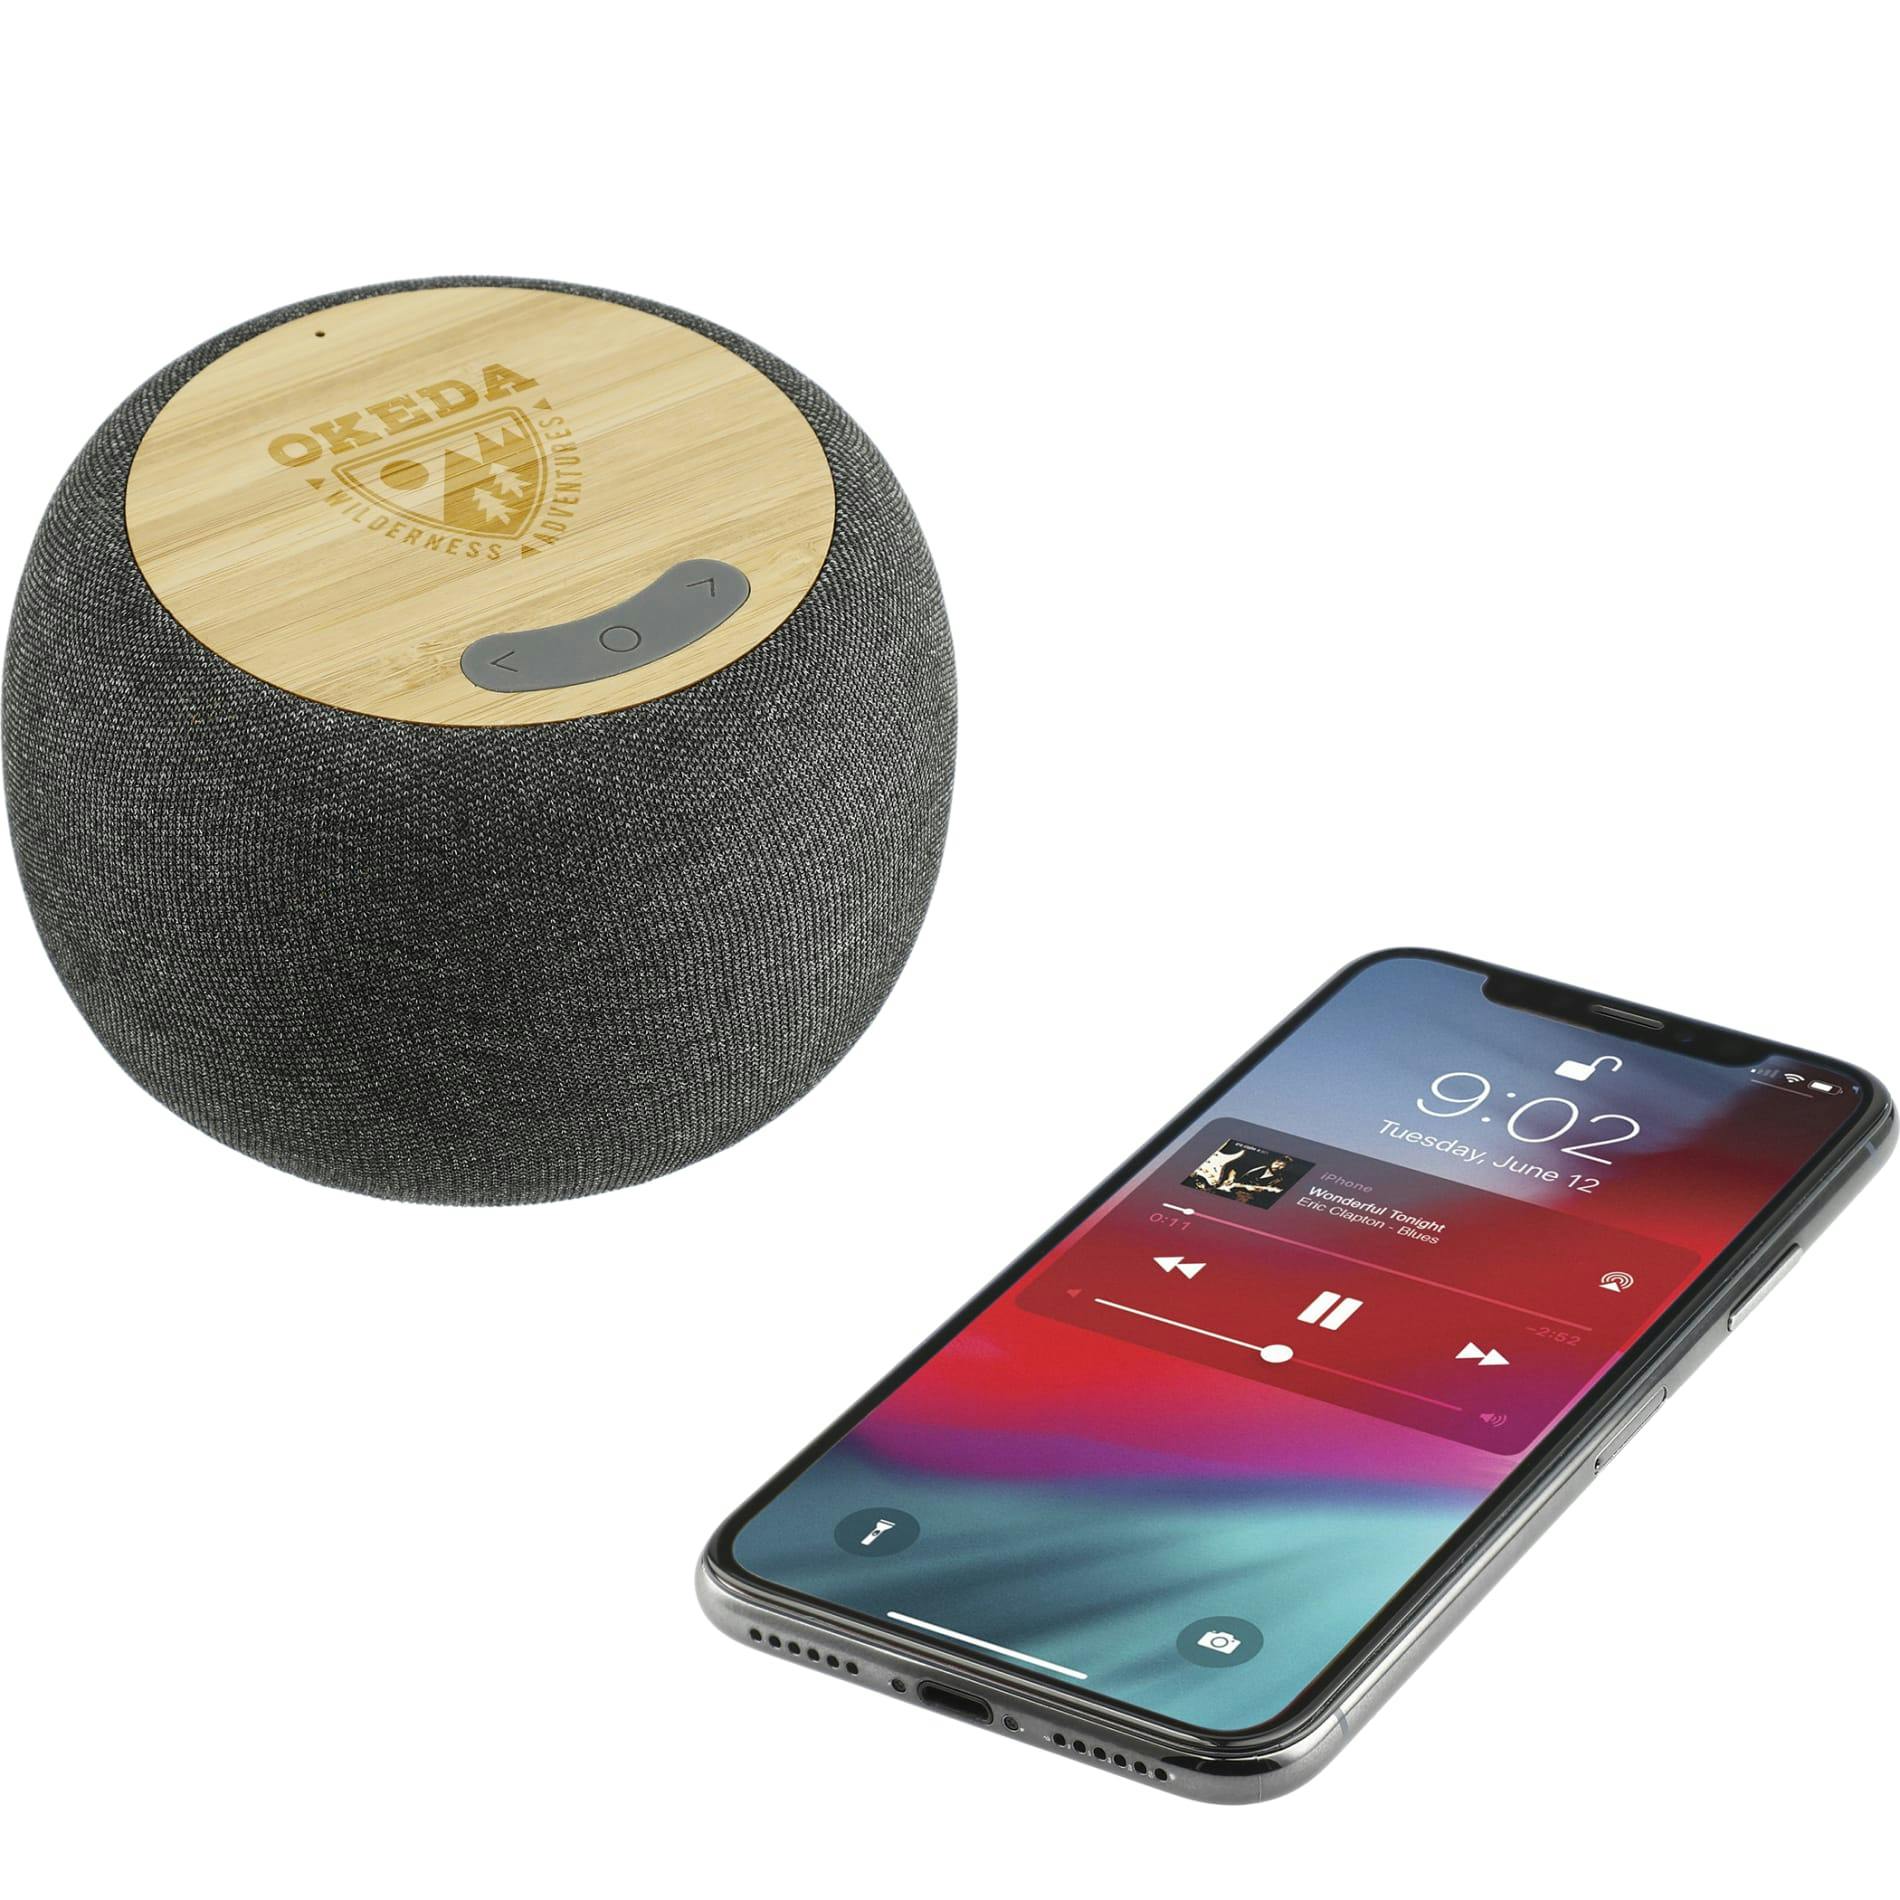 Garm Fabric & Bamboo Speaker with Wireless Chargin - additional Image 2